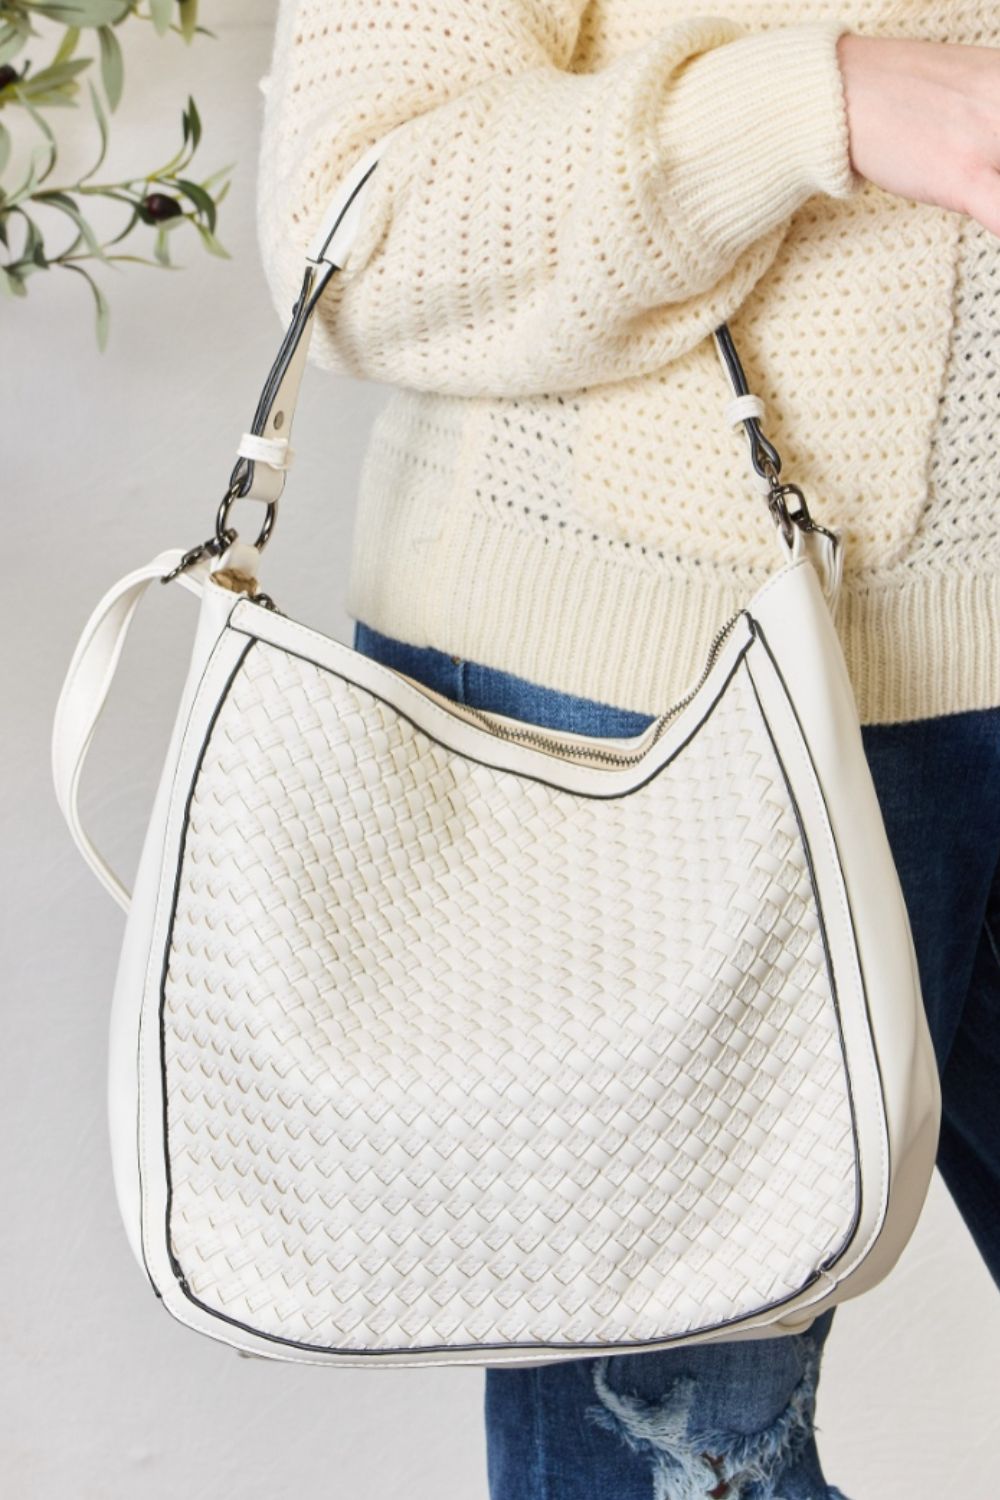 Versatile Weaved Vegan Leather Handbag from SHOMICO